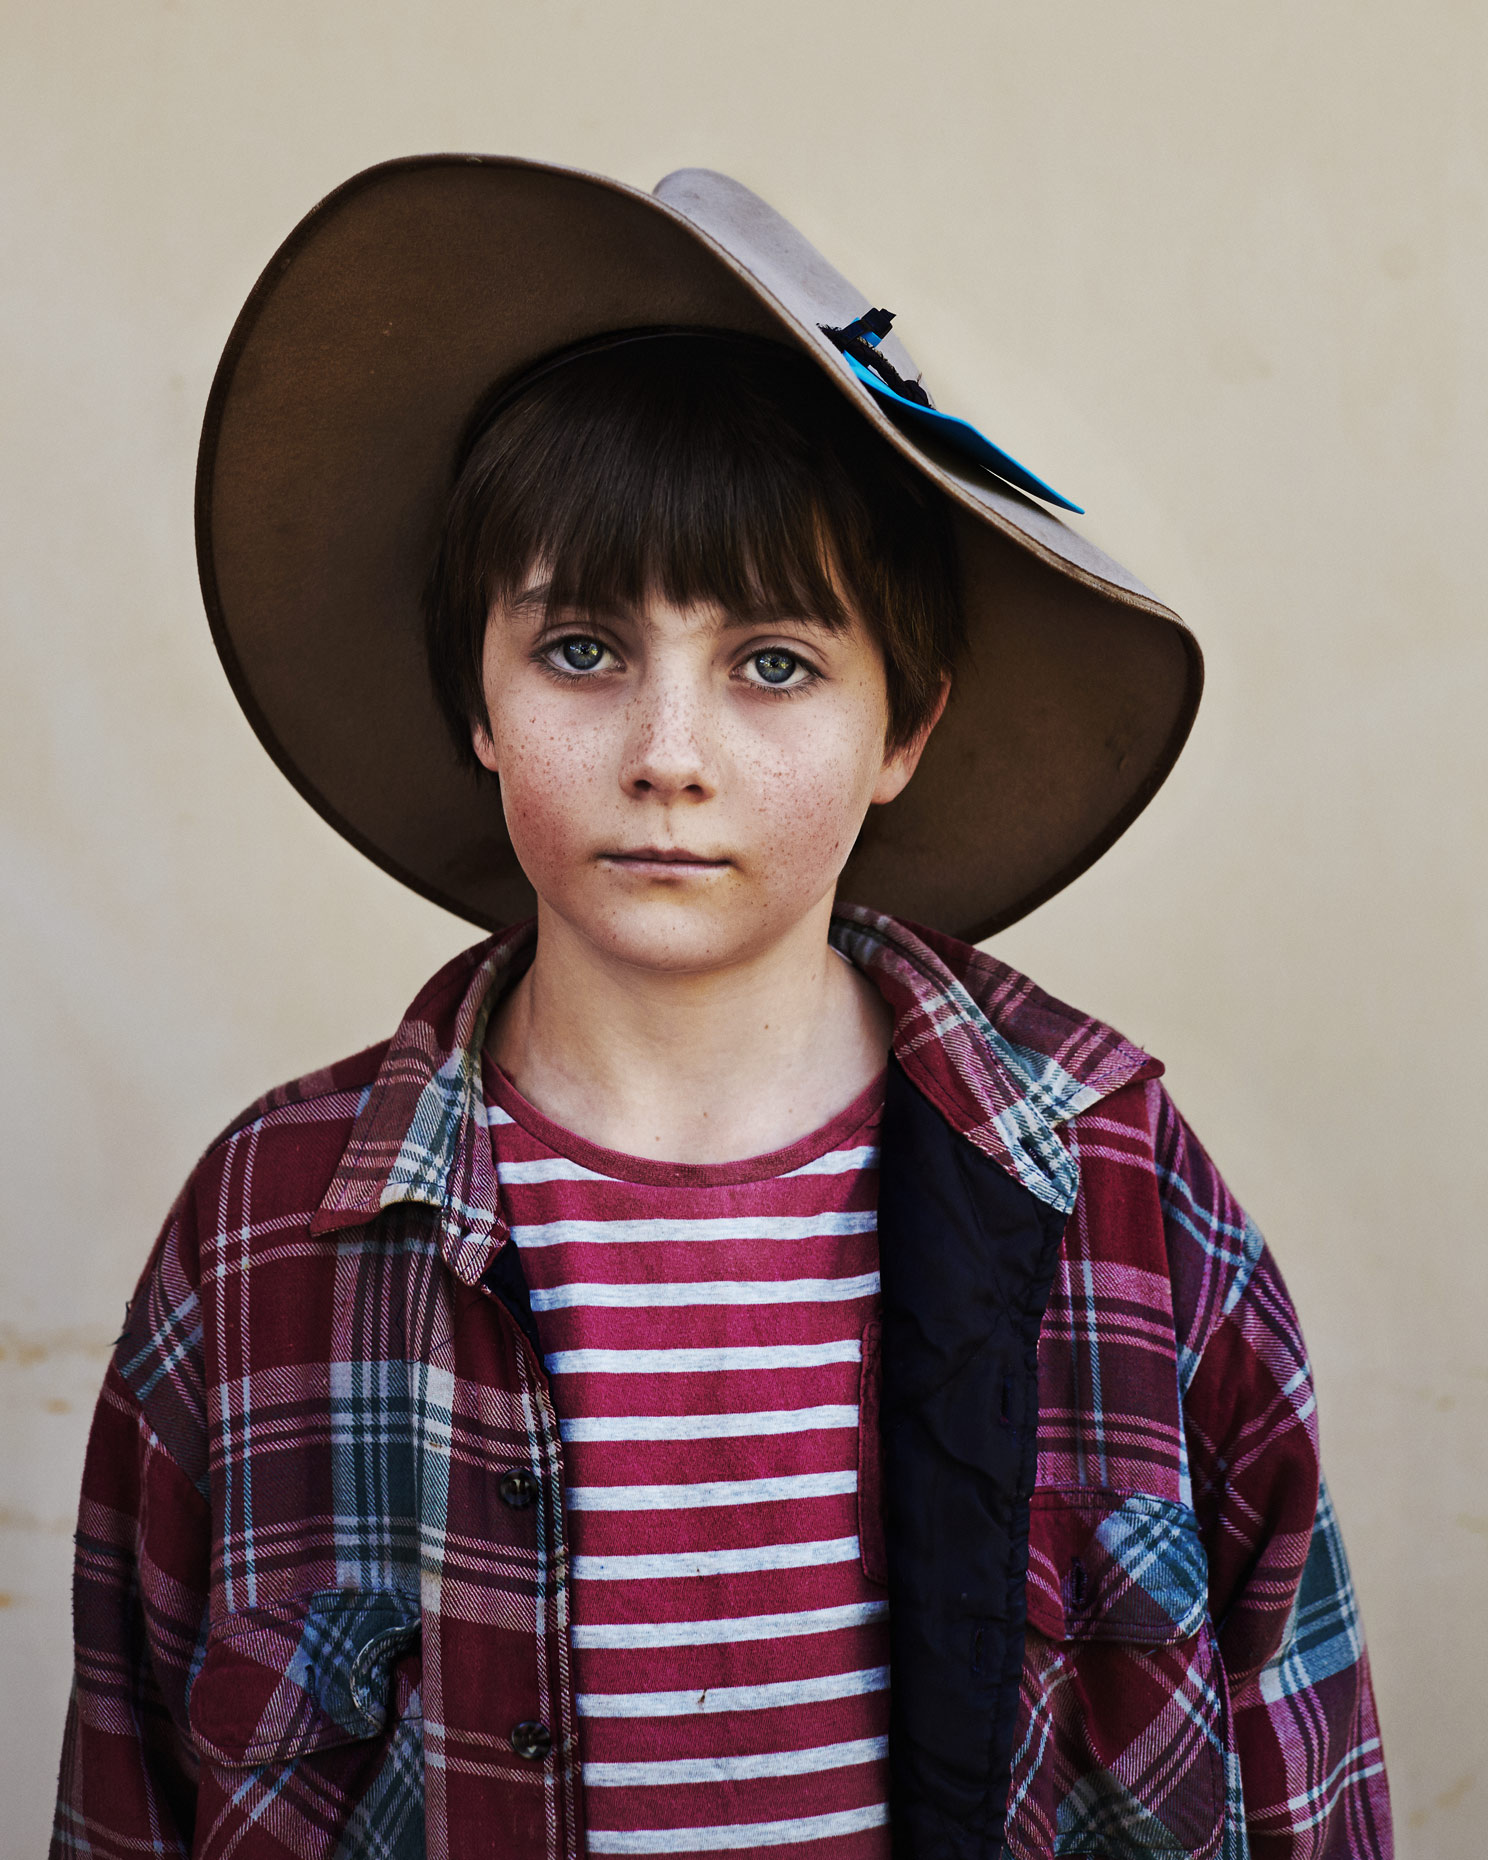 Australian photographer James Braund captures a young jackeroo